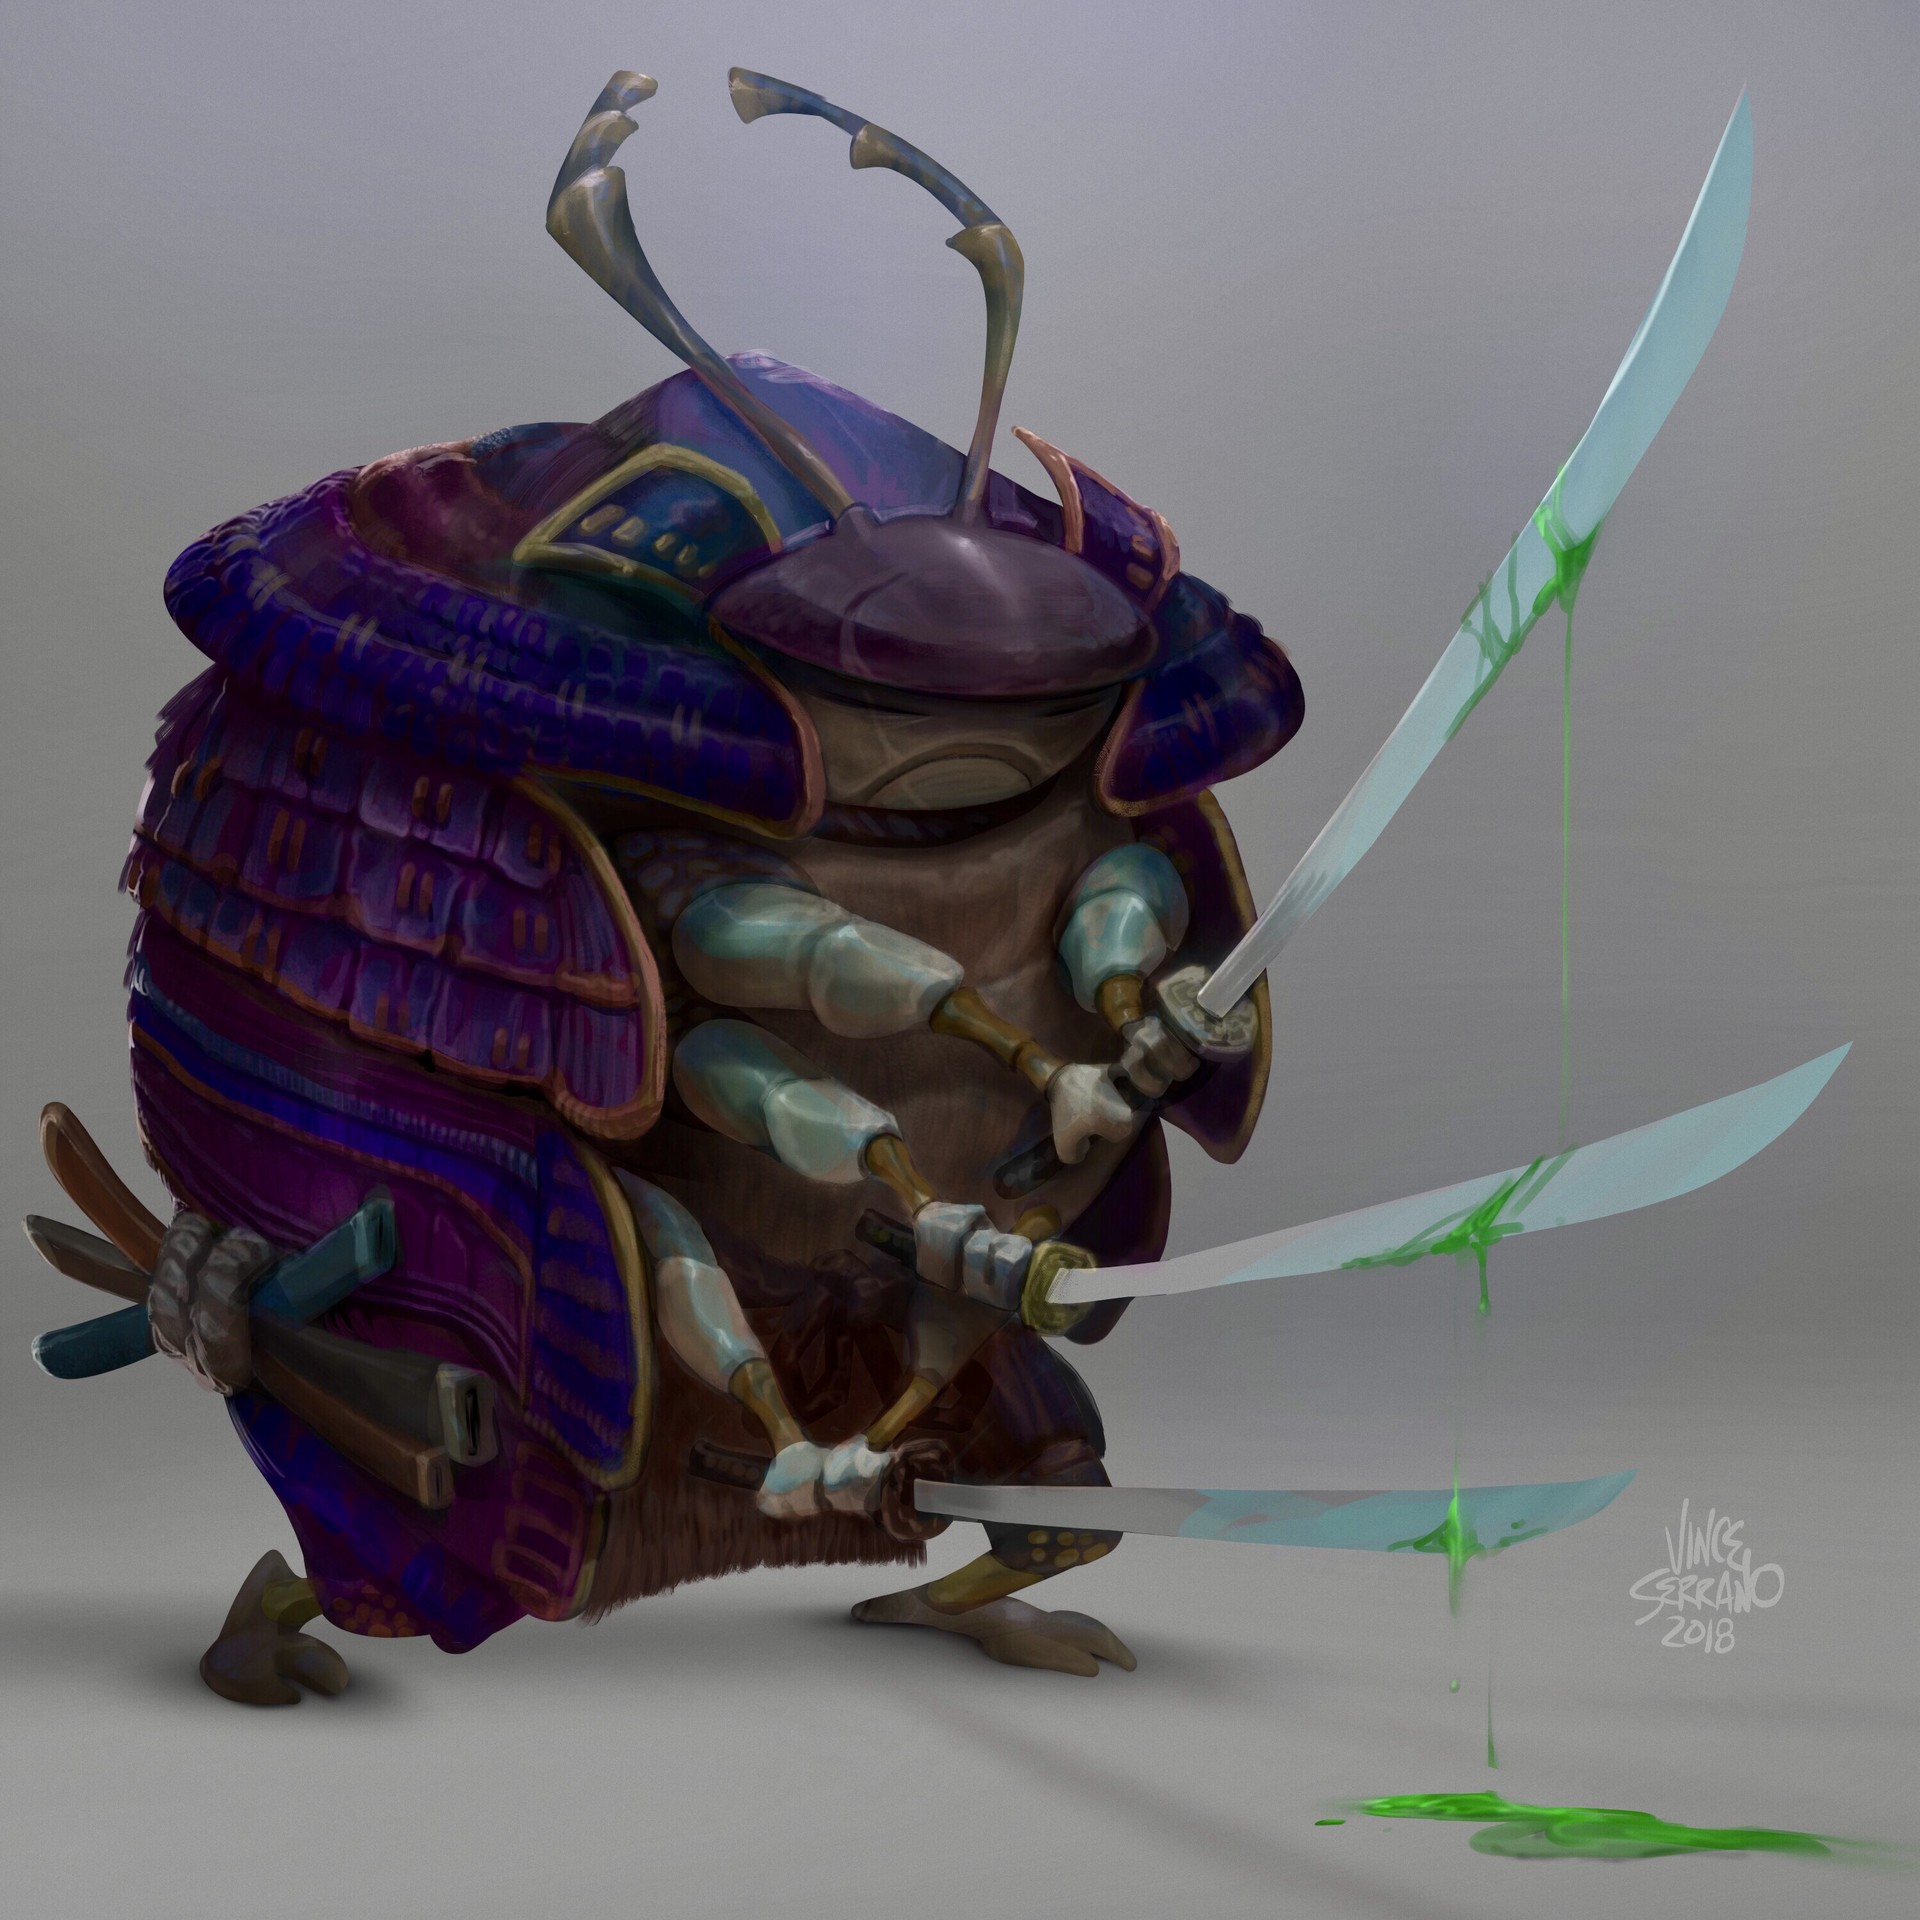 Pill Bug Samurai by Vince Serrano